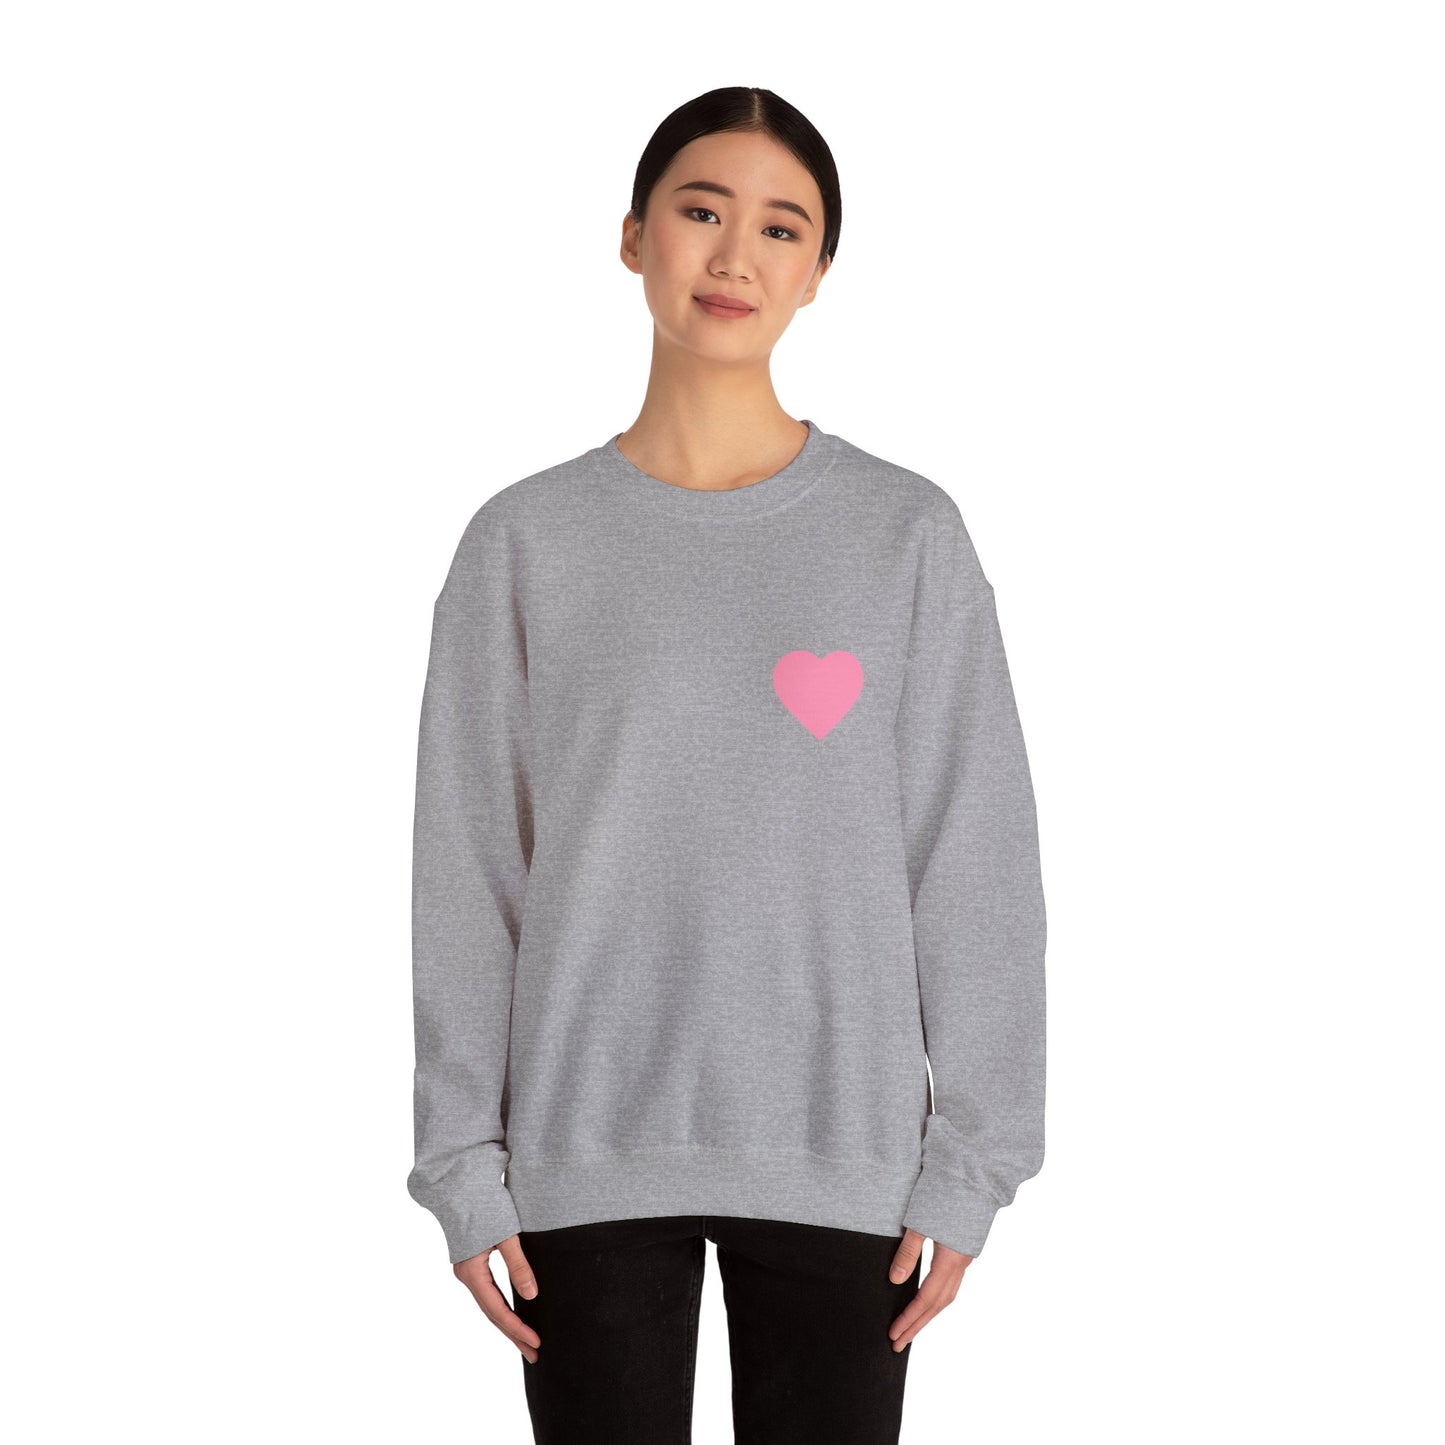 Self Love Club Crewneck Sweatshirt